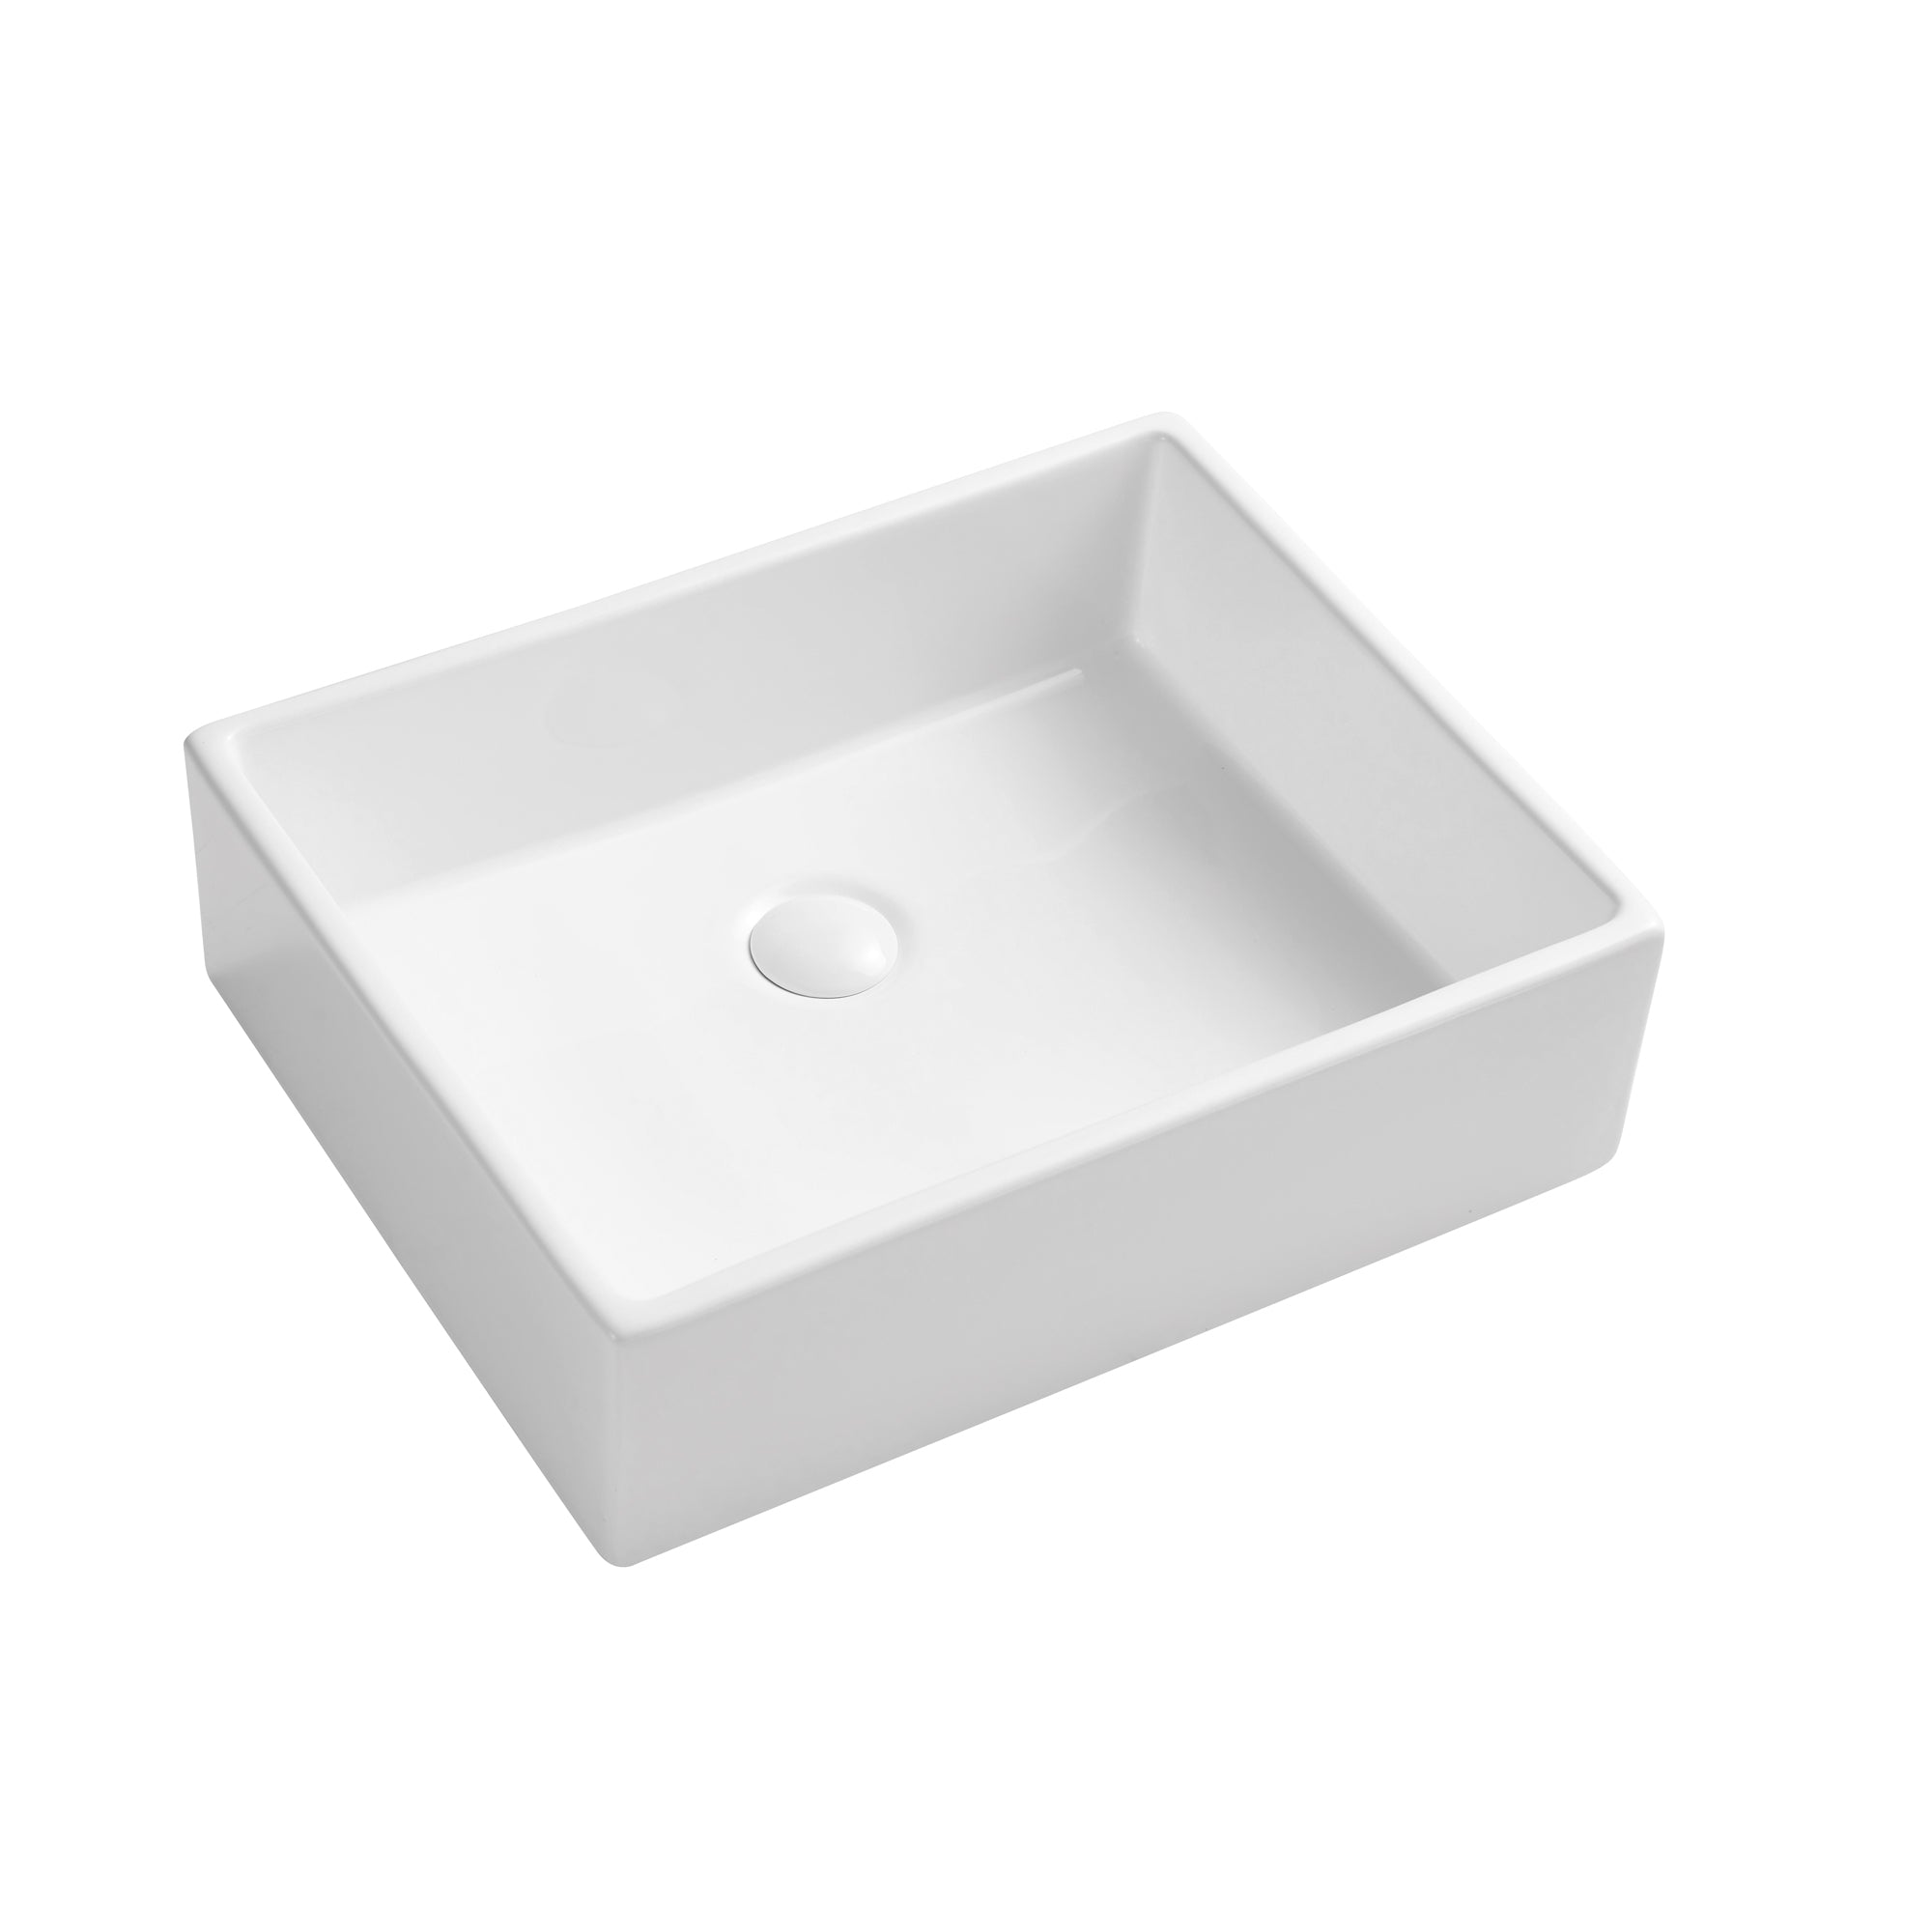 Ceramic Rectangular Above Counter White Bathroom Sink Art Basin